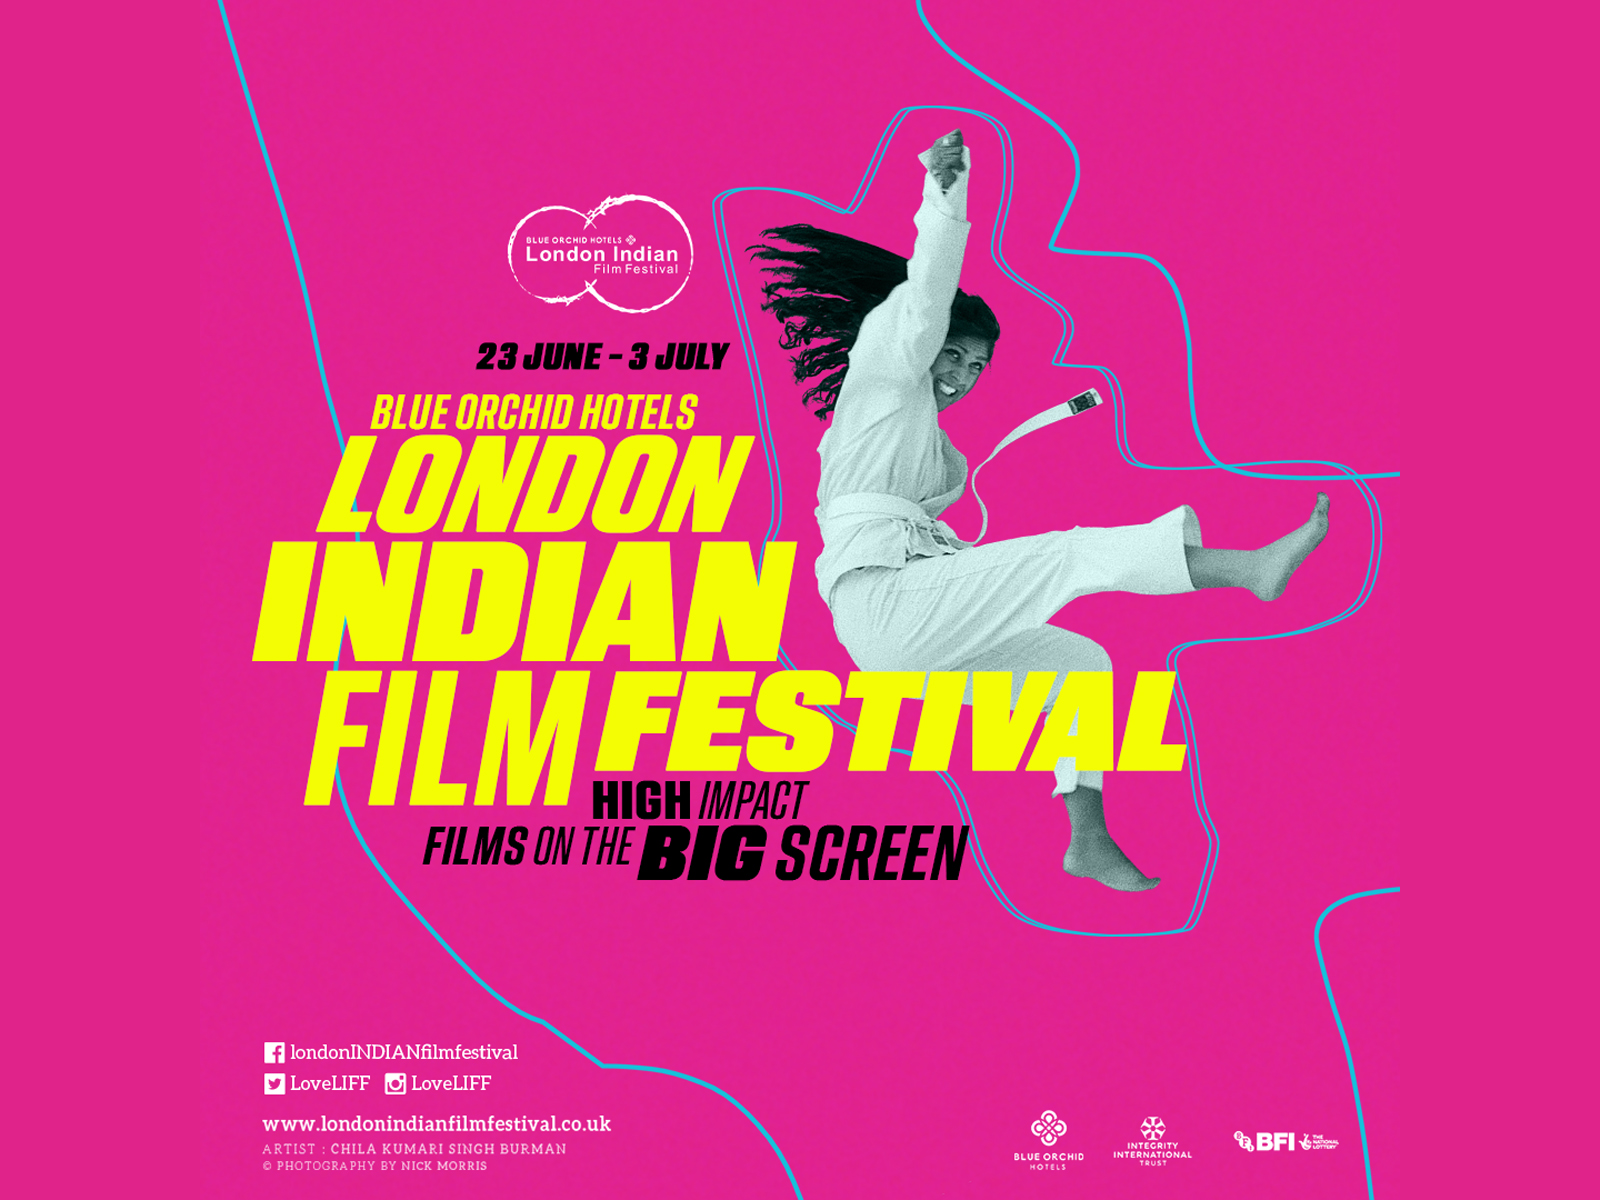 London Indian Film Festival is starting next week in London, Birmingham &  Manchester